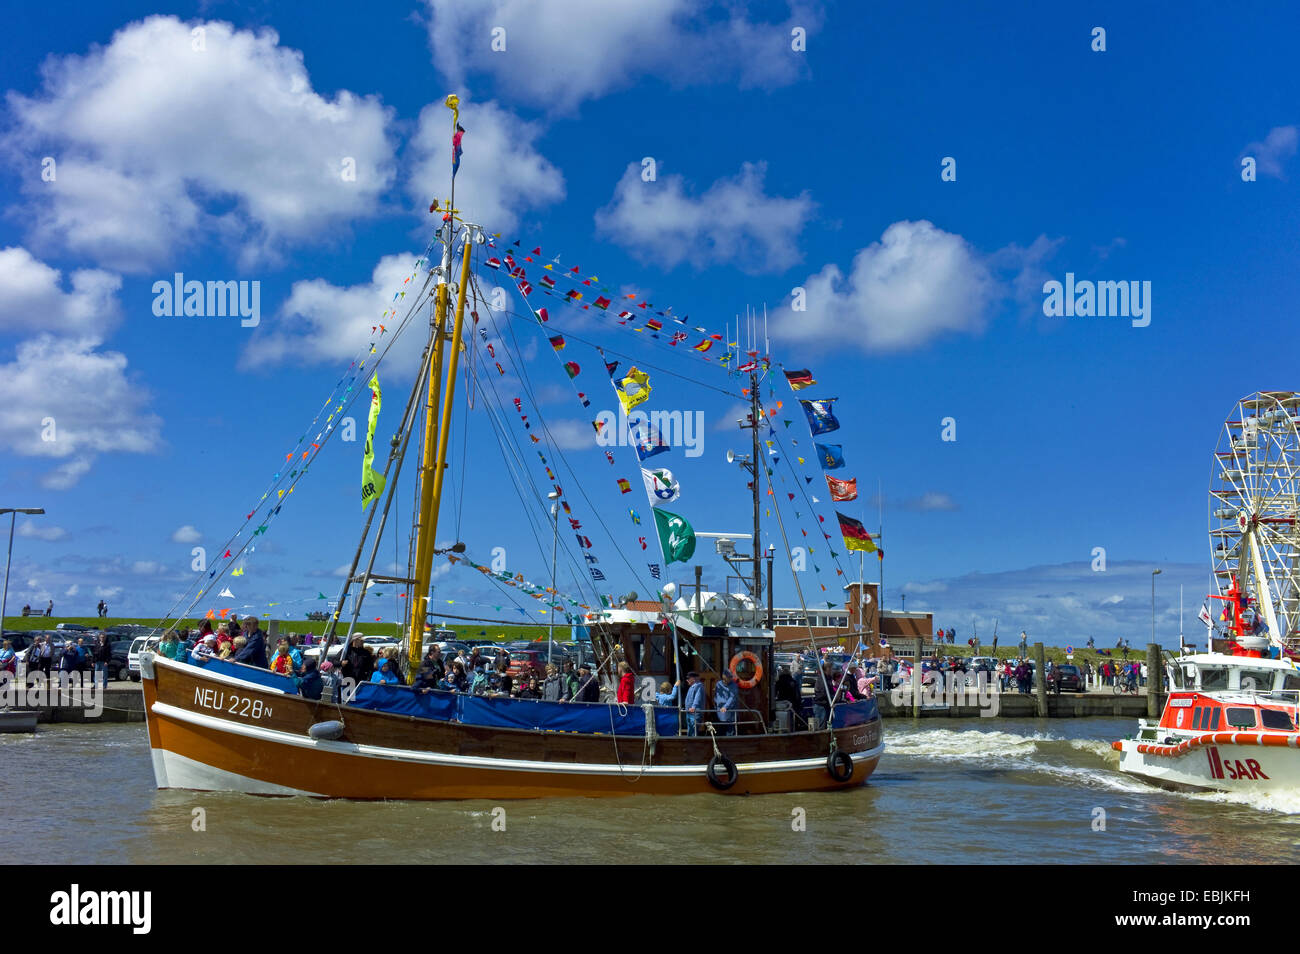 decorated shrimp boat in the harbour, Germany, Lower Saxony, Neuharlingersiel Stock Photo